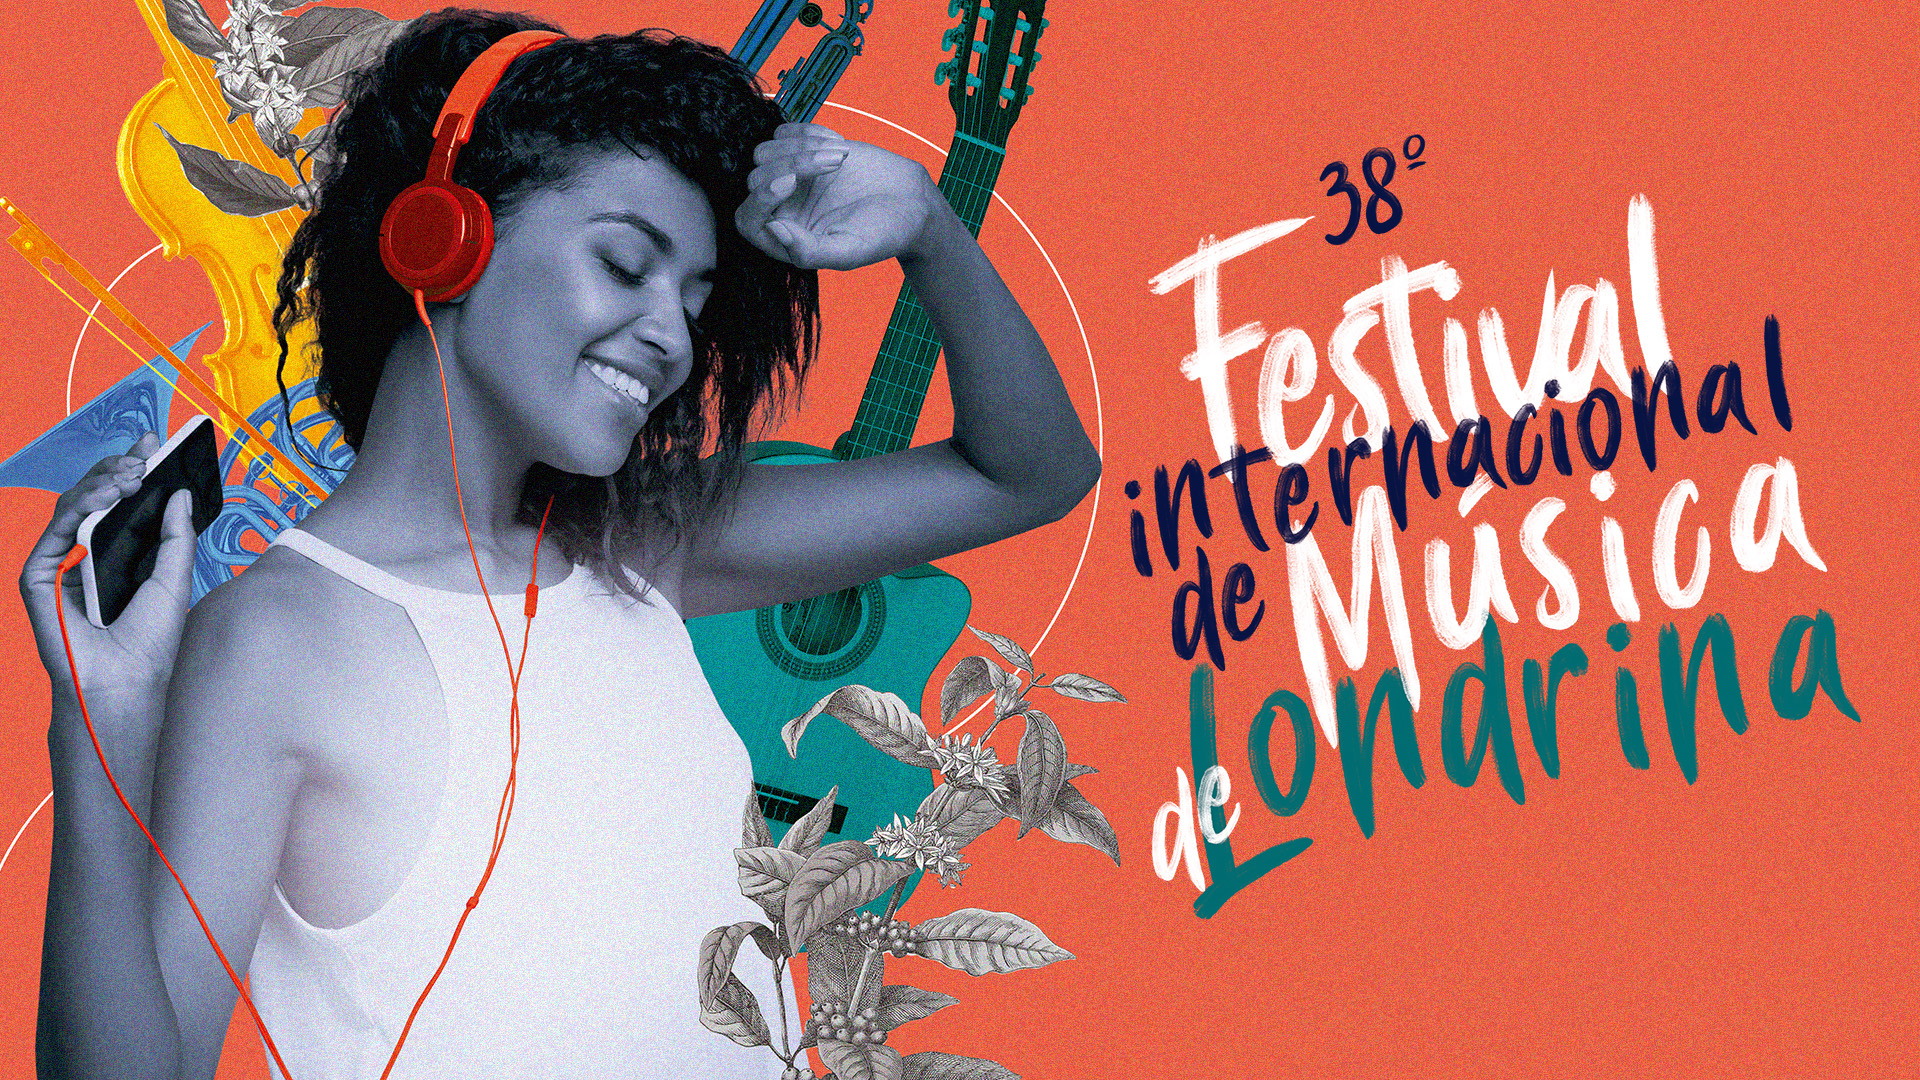 Festival de Música de Londrina